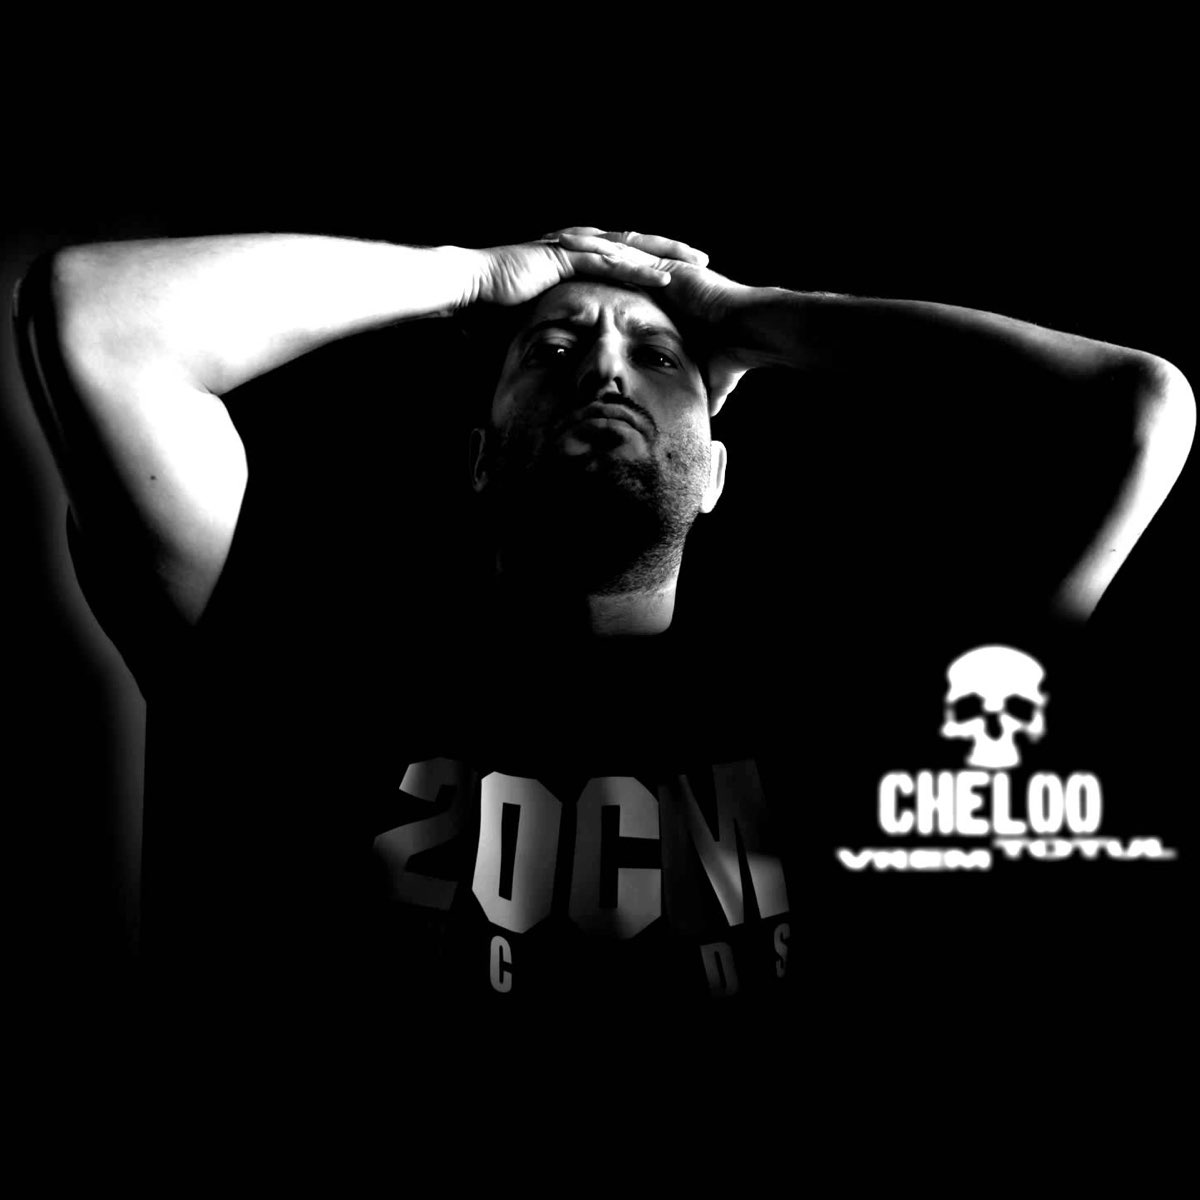 Vrem Totul - Single - Album by Cheloo - Apple Music